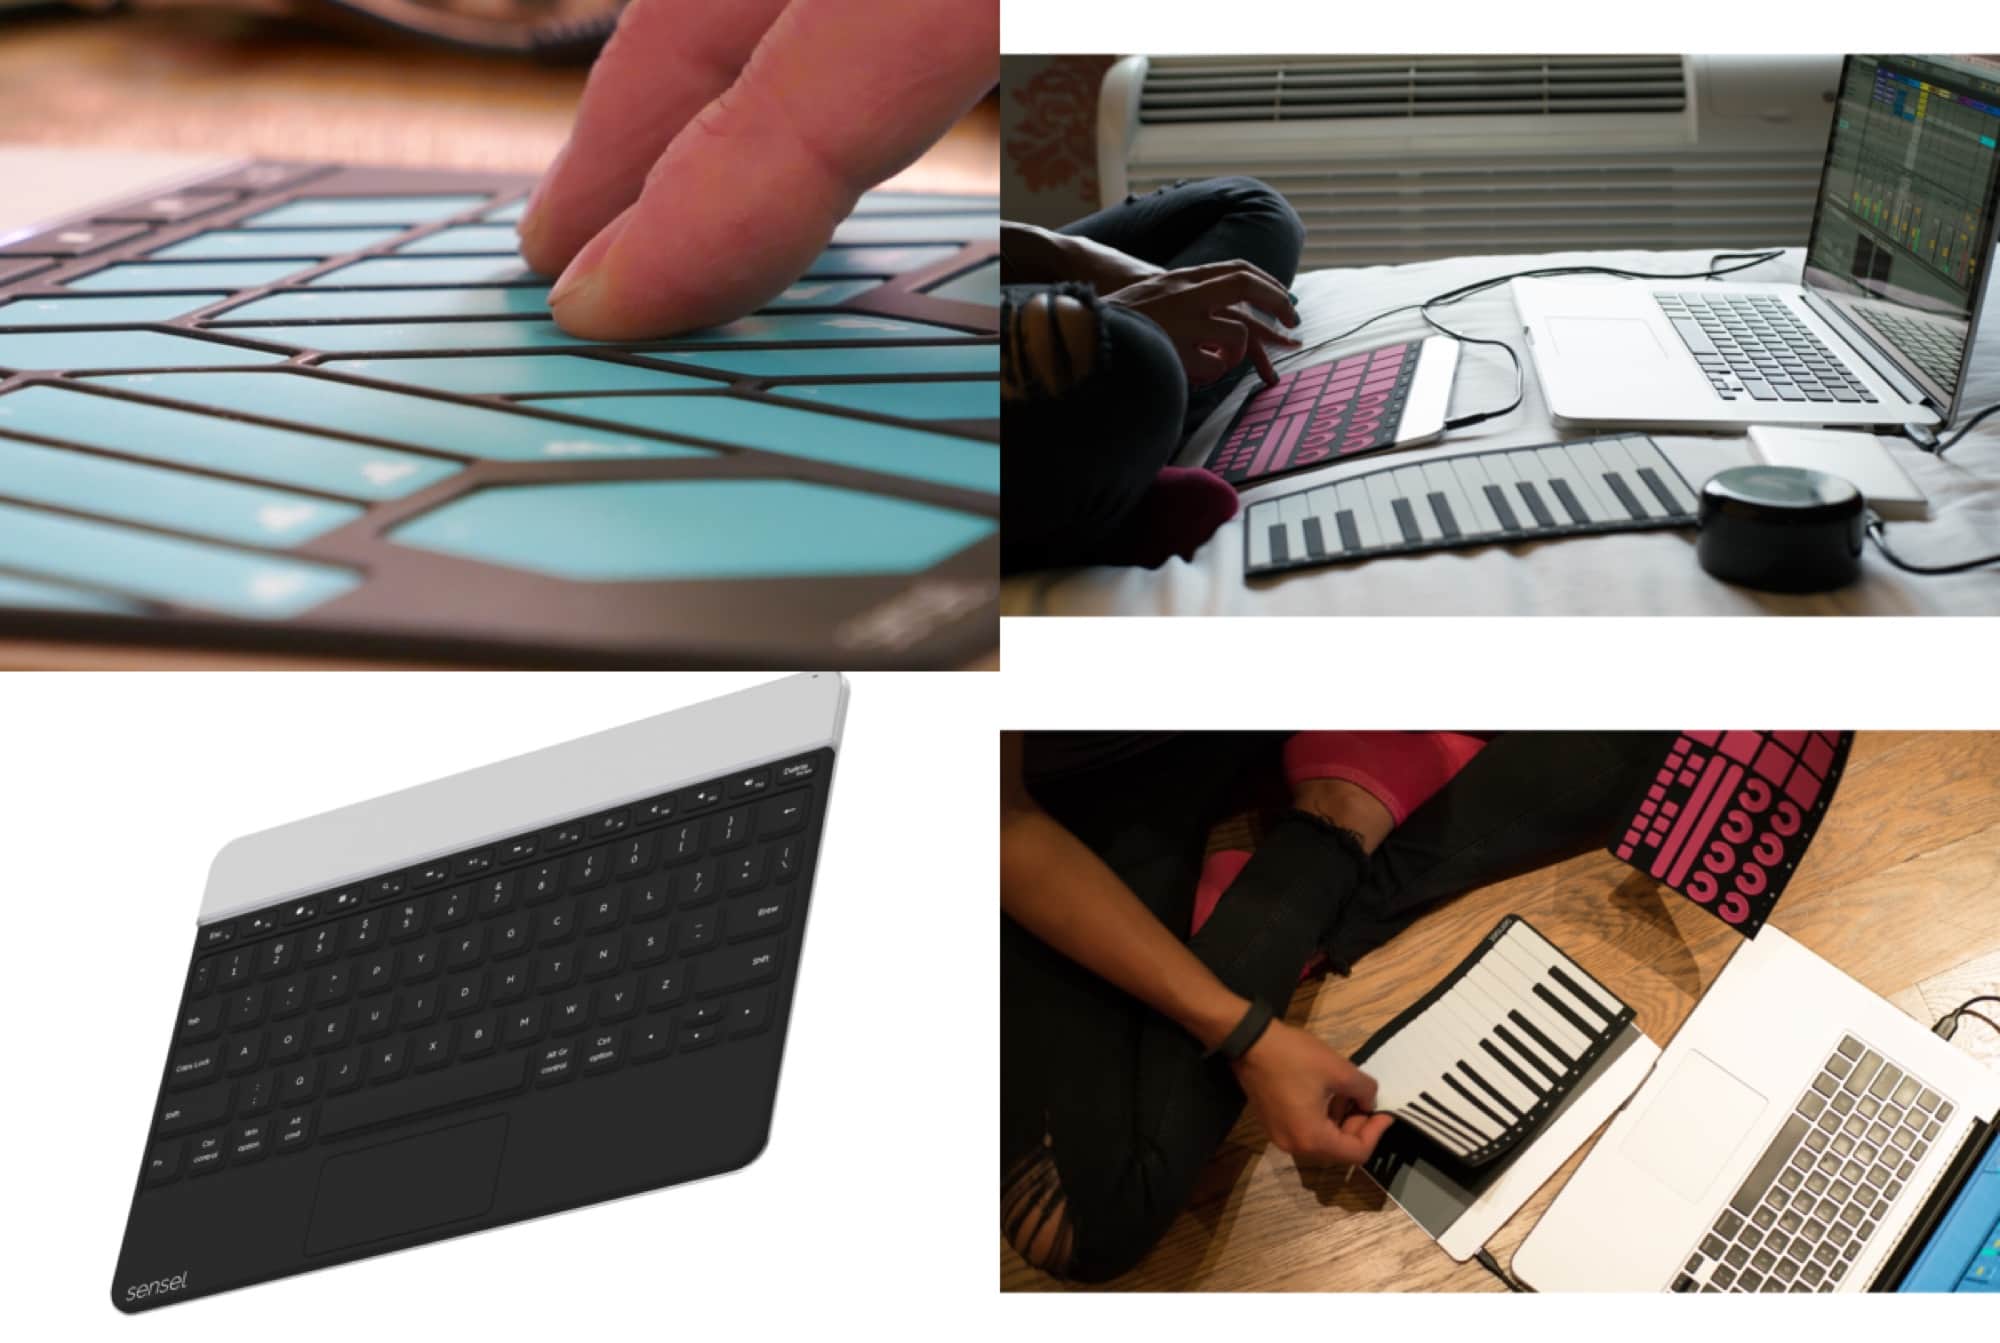 The Sensel Morph keyboard is portable and flexible.